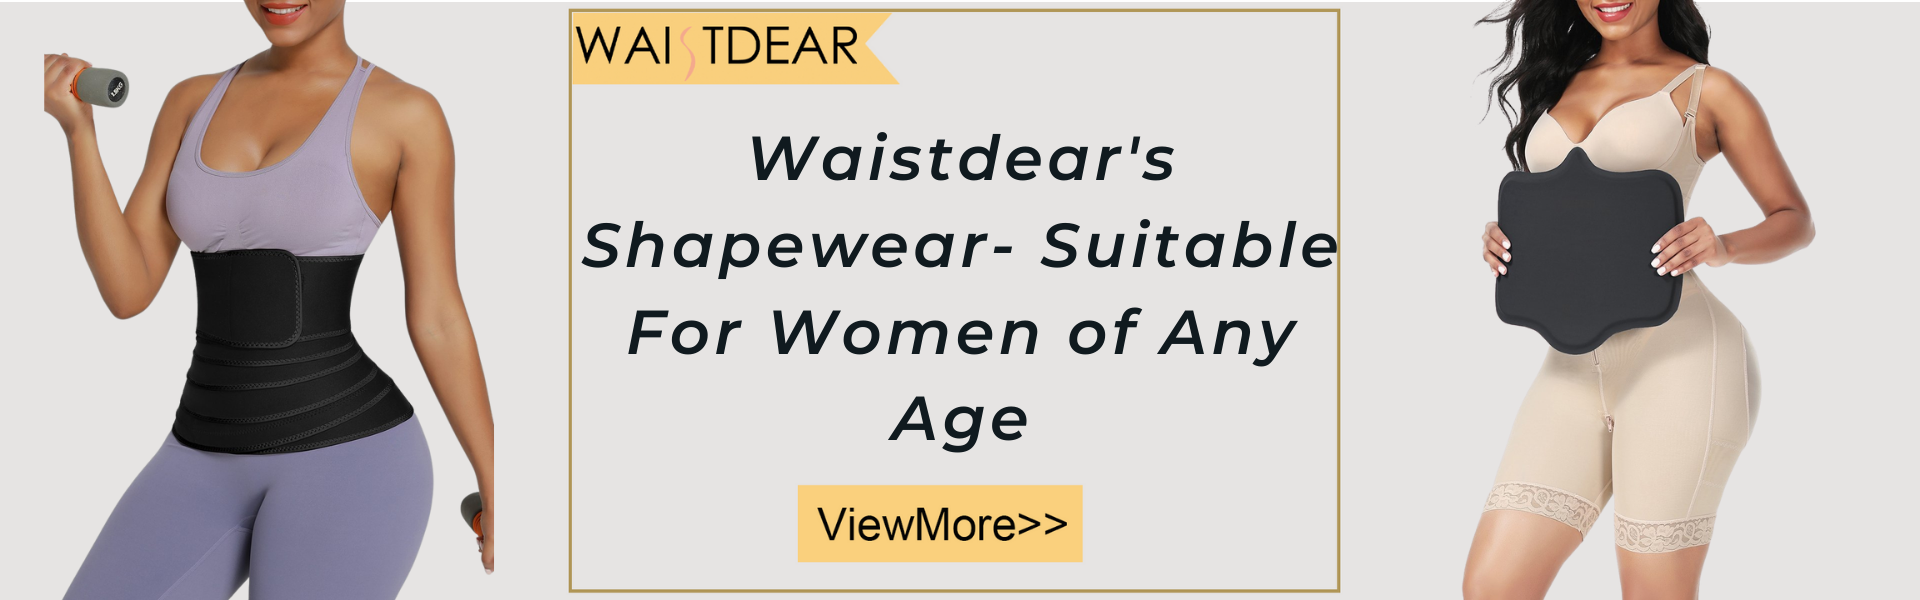 Waistdear's Shapewear- Suitable For Women of Any Age